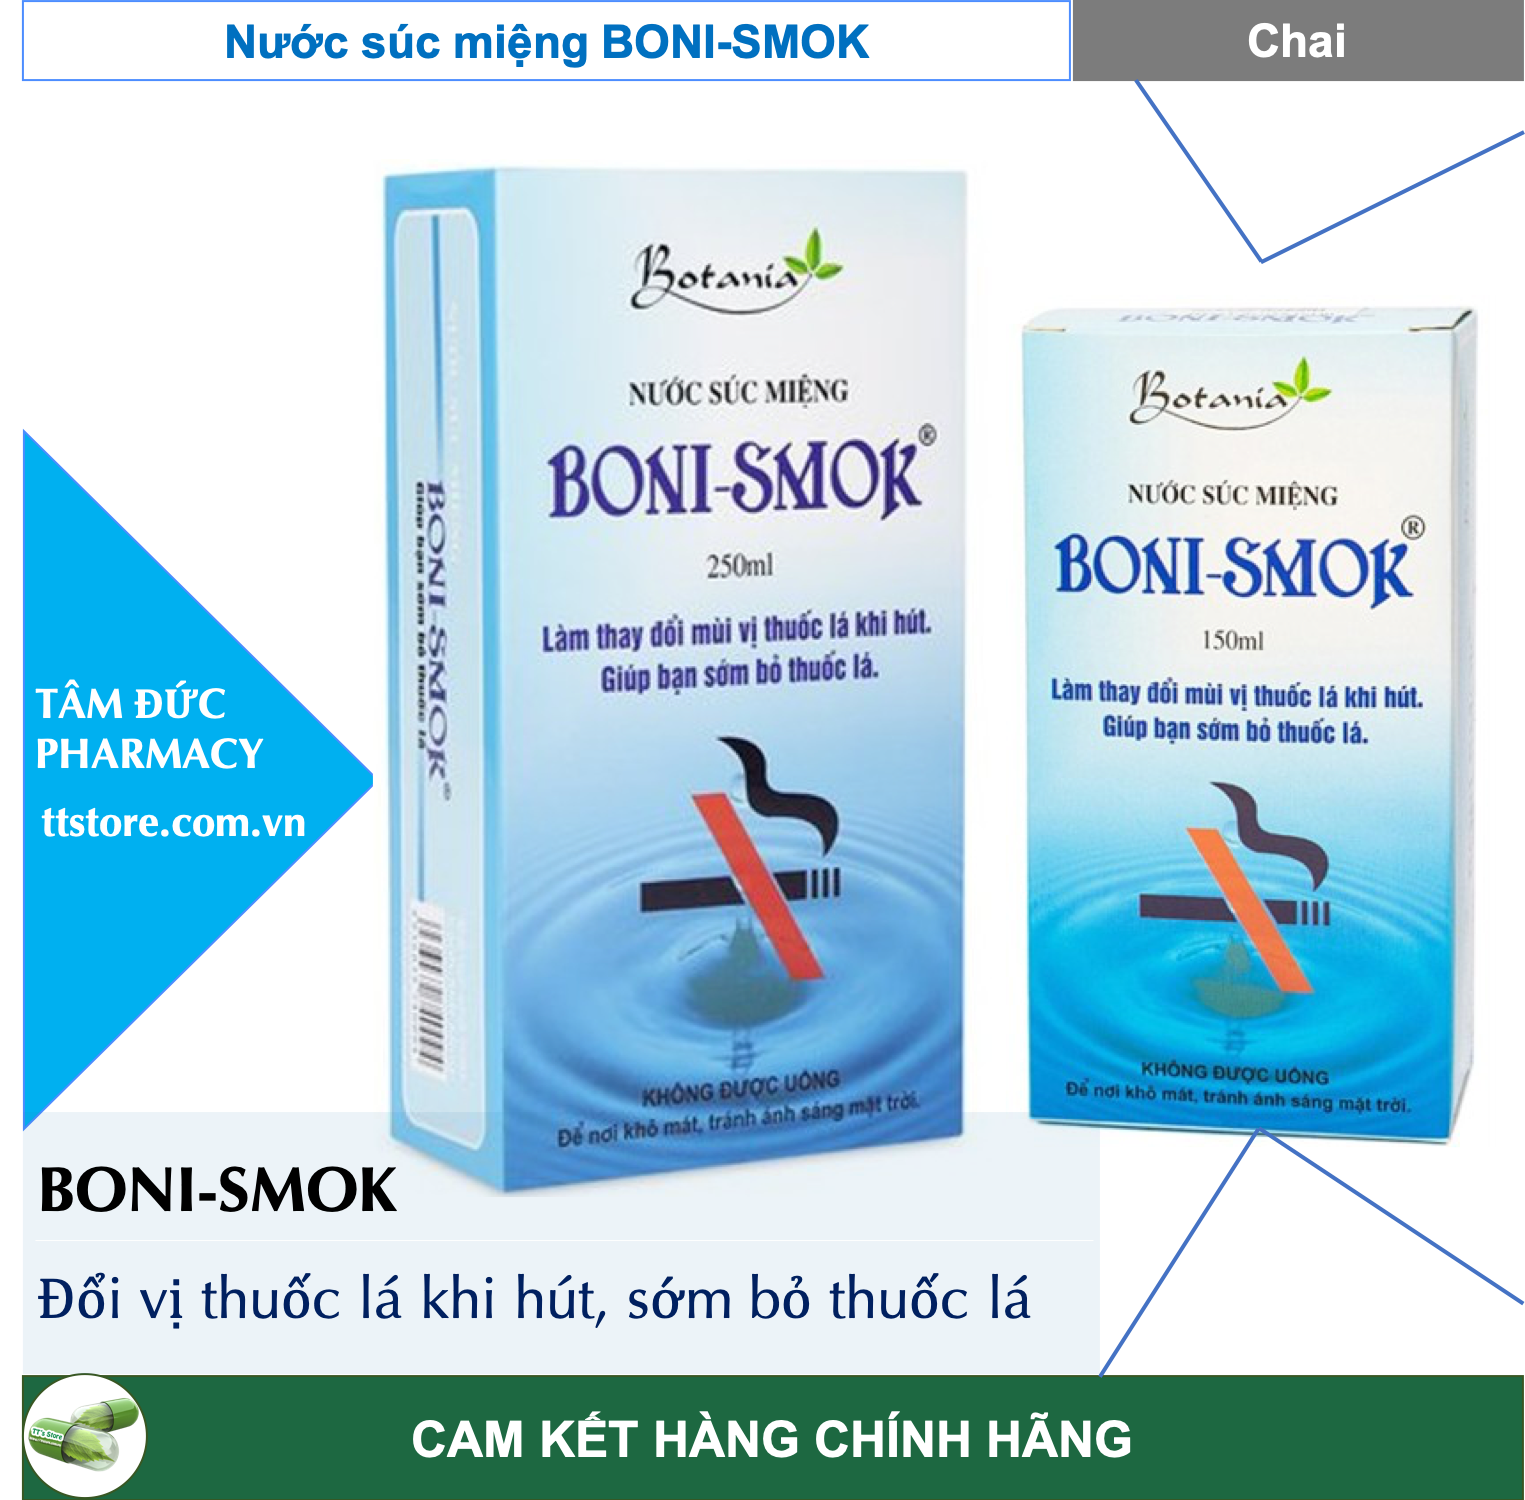 Nước súc miệng BoniSmok Chai 150ml - 250ml - Botania - Boni smok